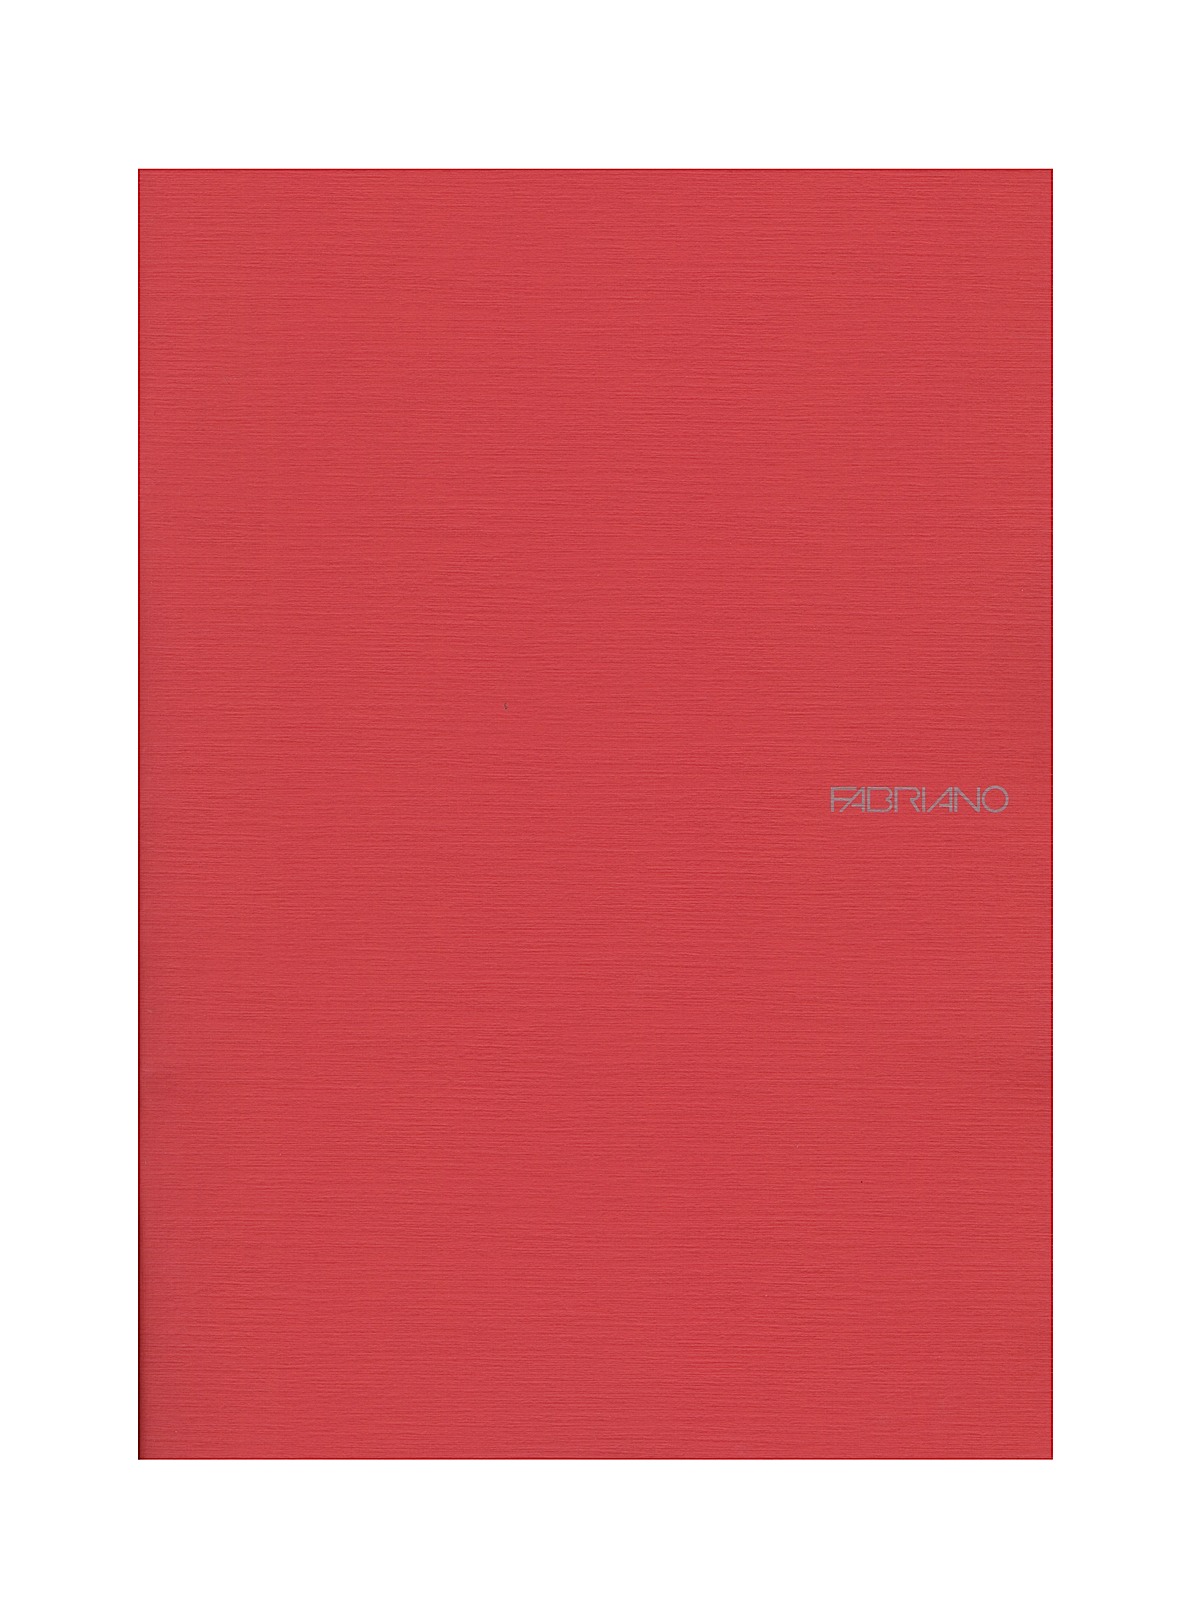 Fabriano EcoQua Notebooks